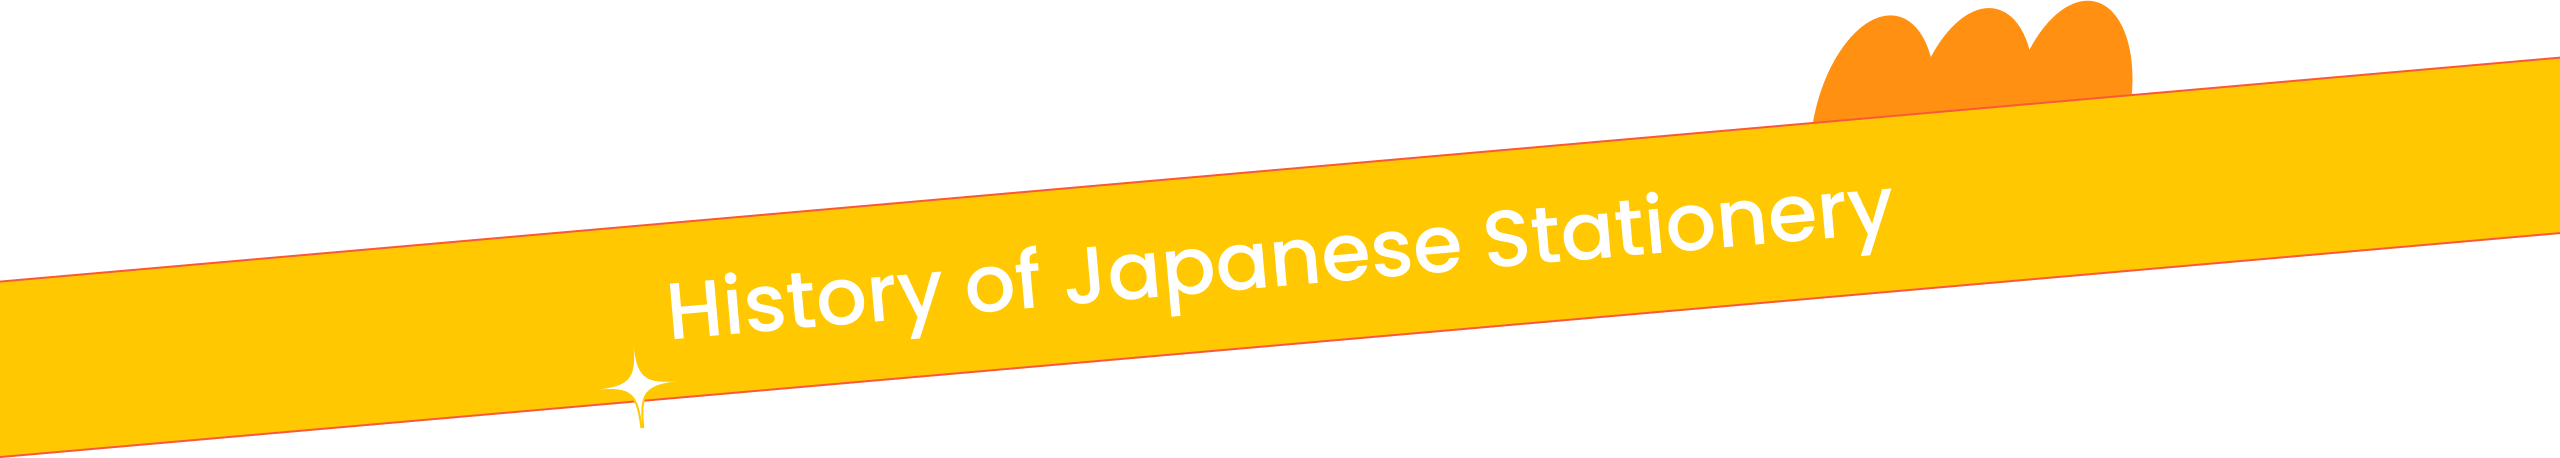 History of Japanese Stationery